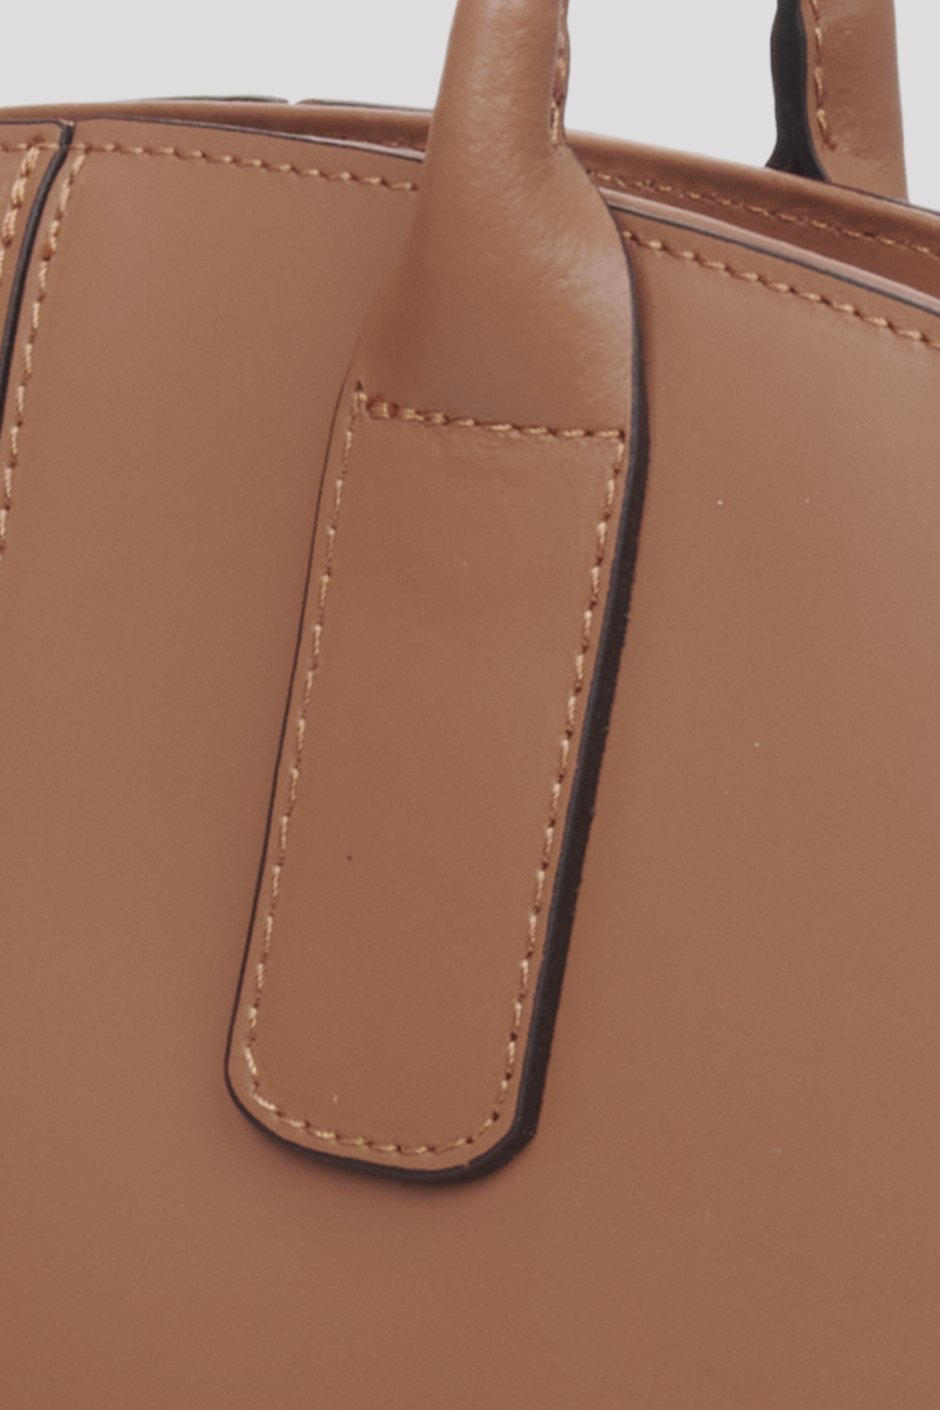 Estro brown leather women's bag - close-up on details.